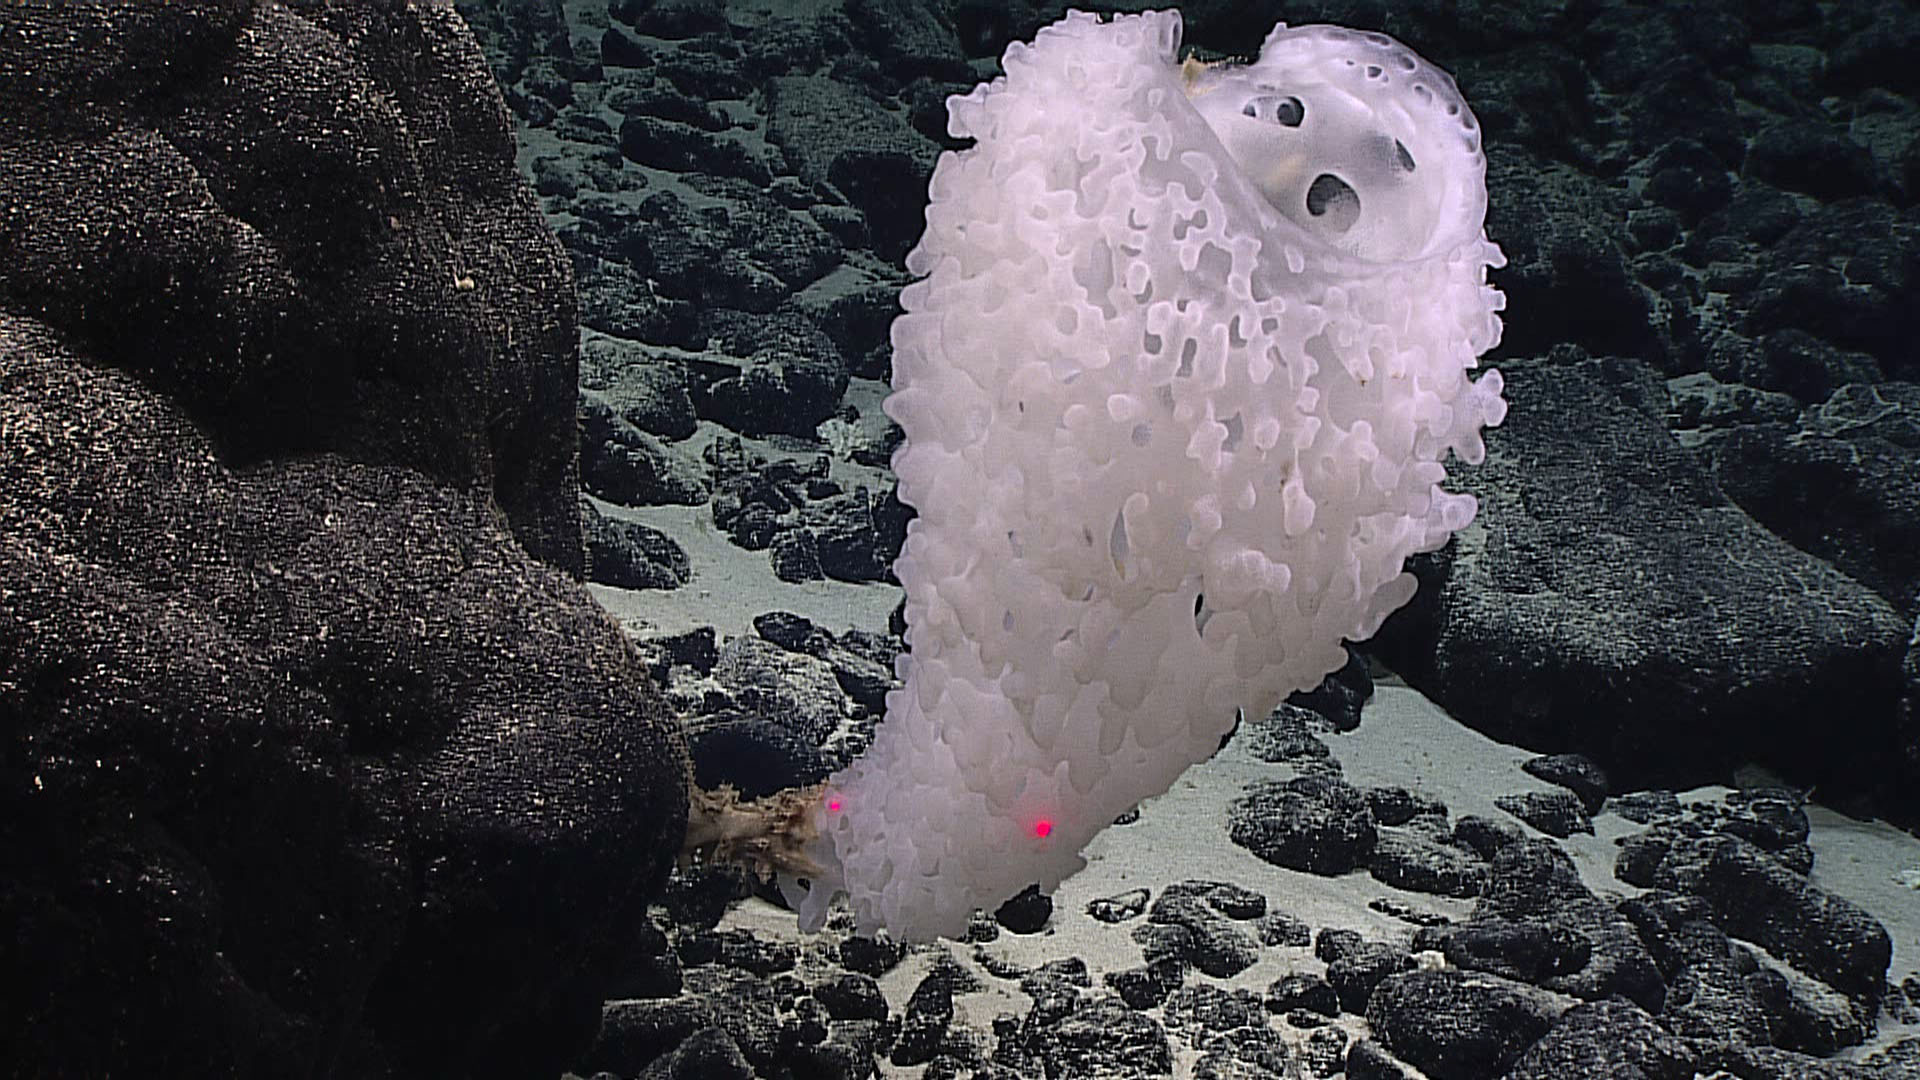 Photograph of a deep sea glass sponge